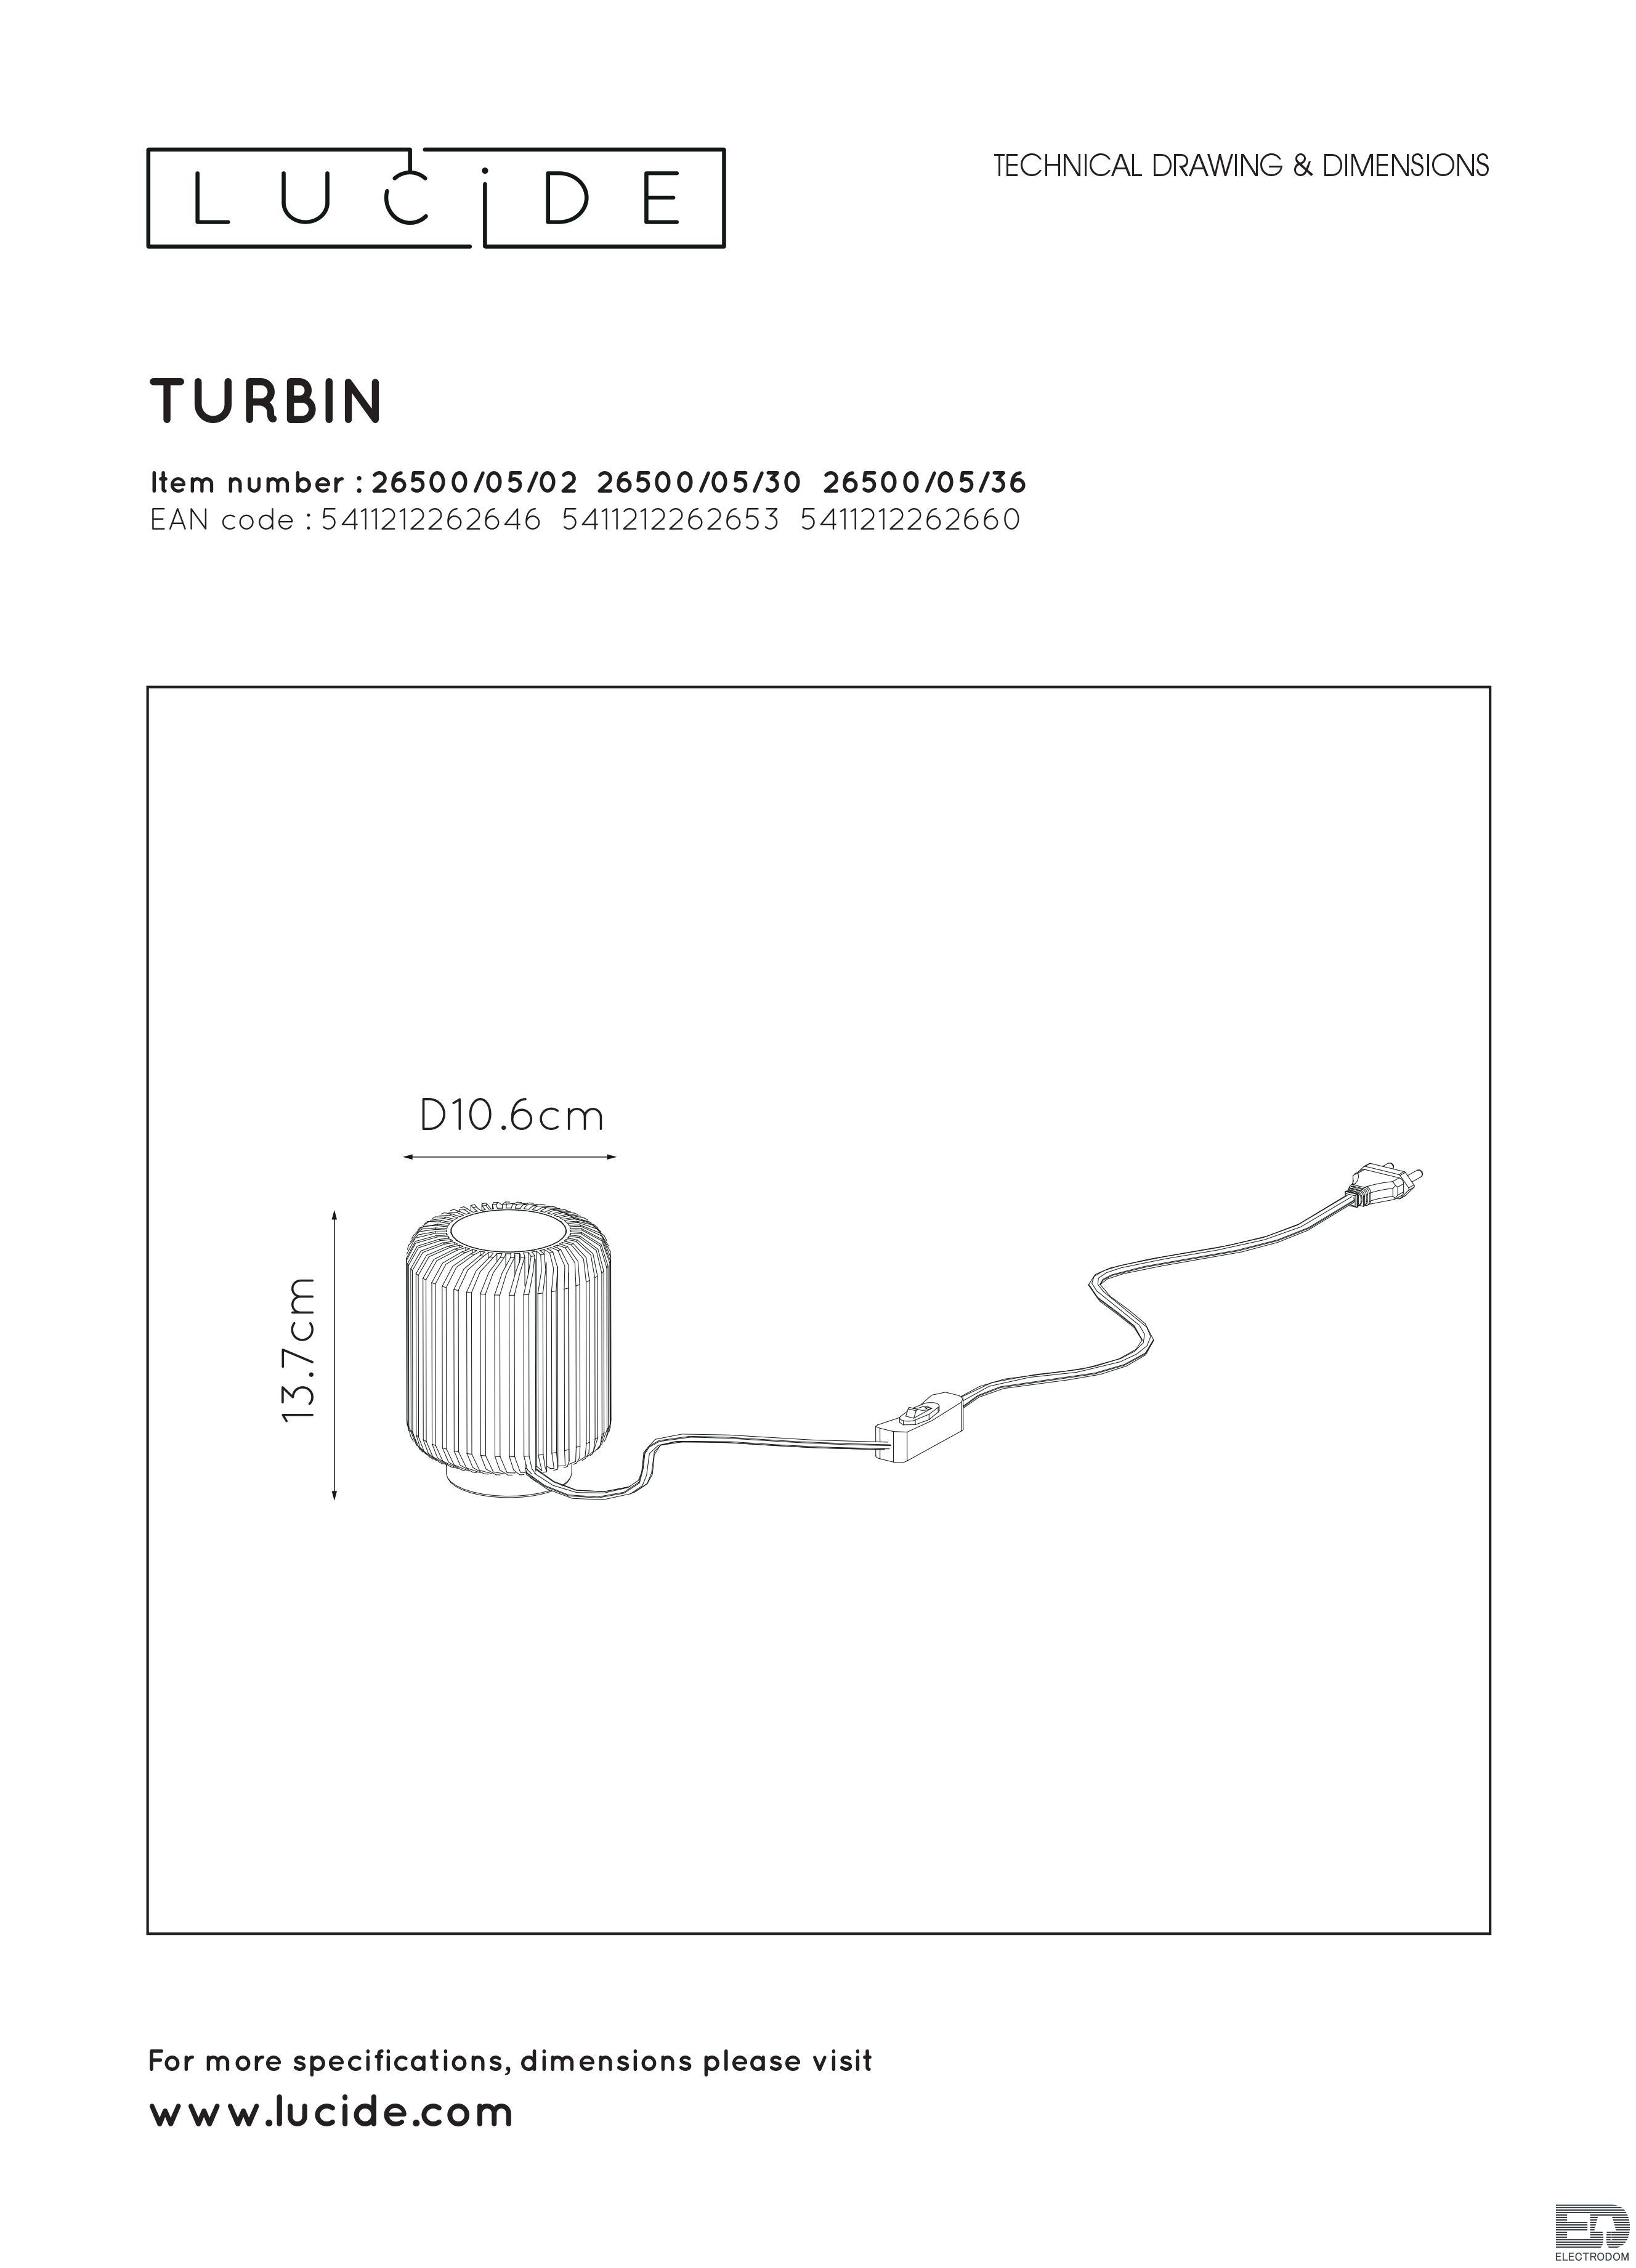 Настольная лампа Lucide Turbin 26500/05/02 - цена и фото 5